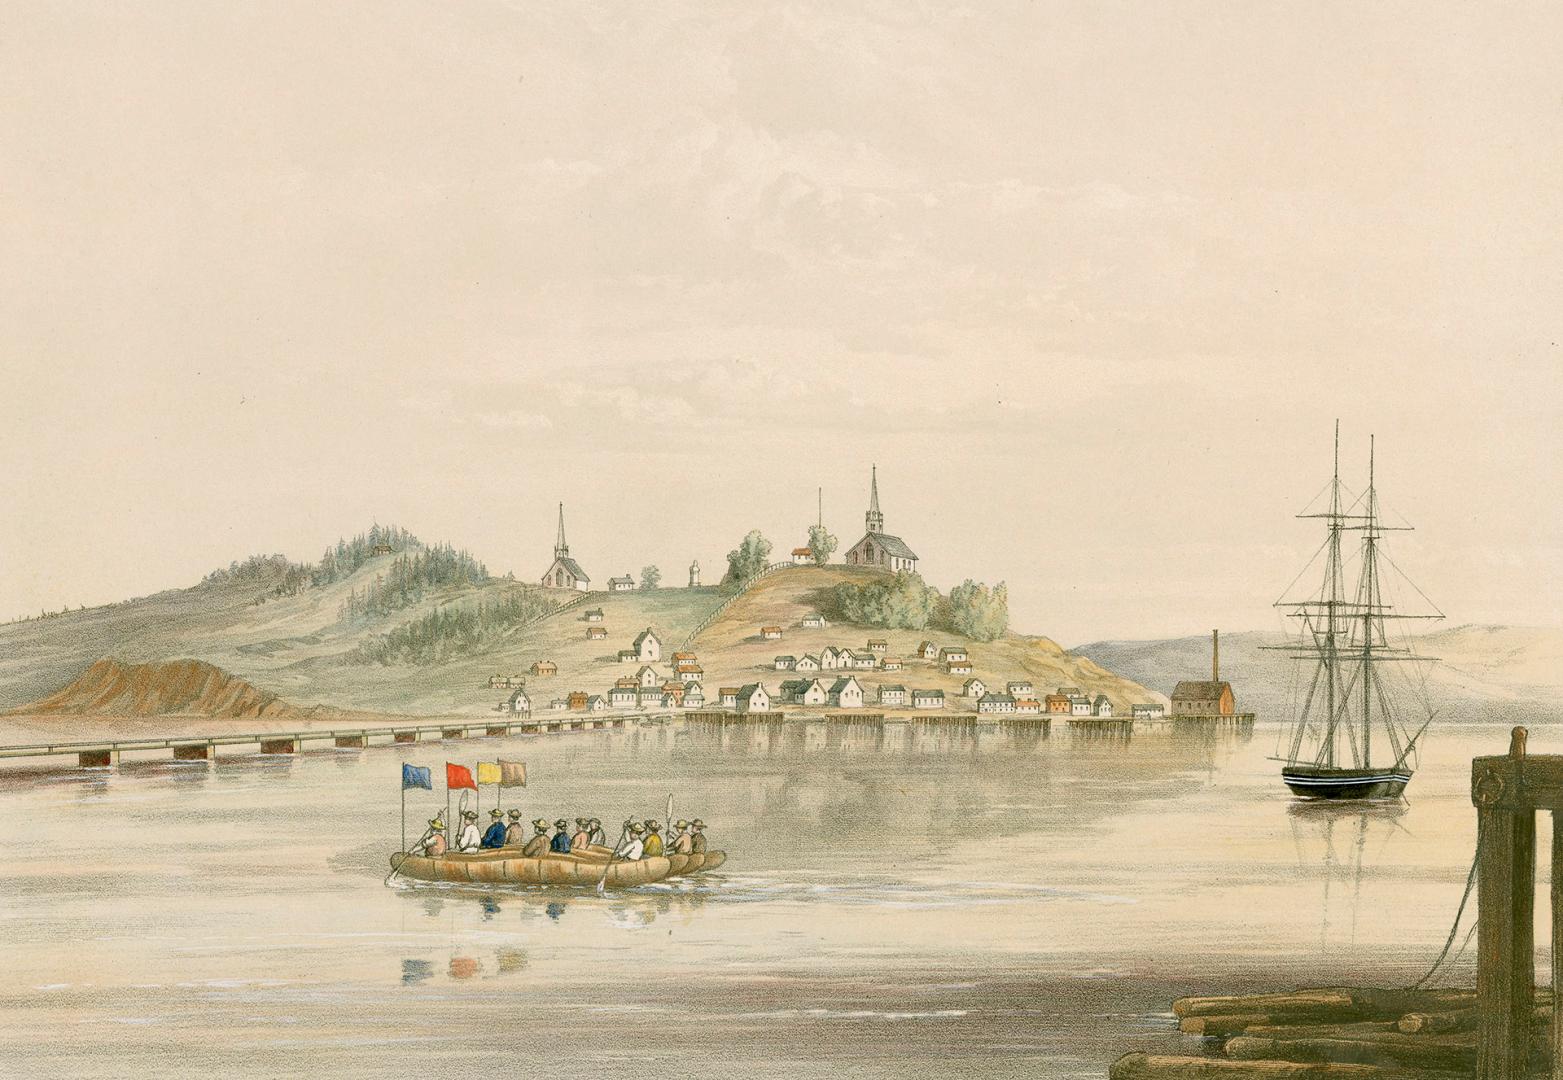 The Town of Bathurst (New Brunswick)